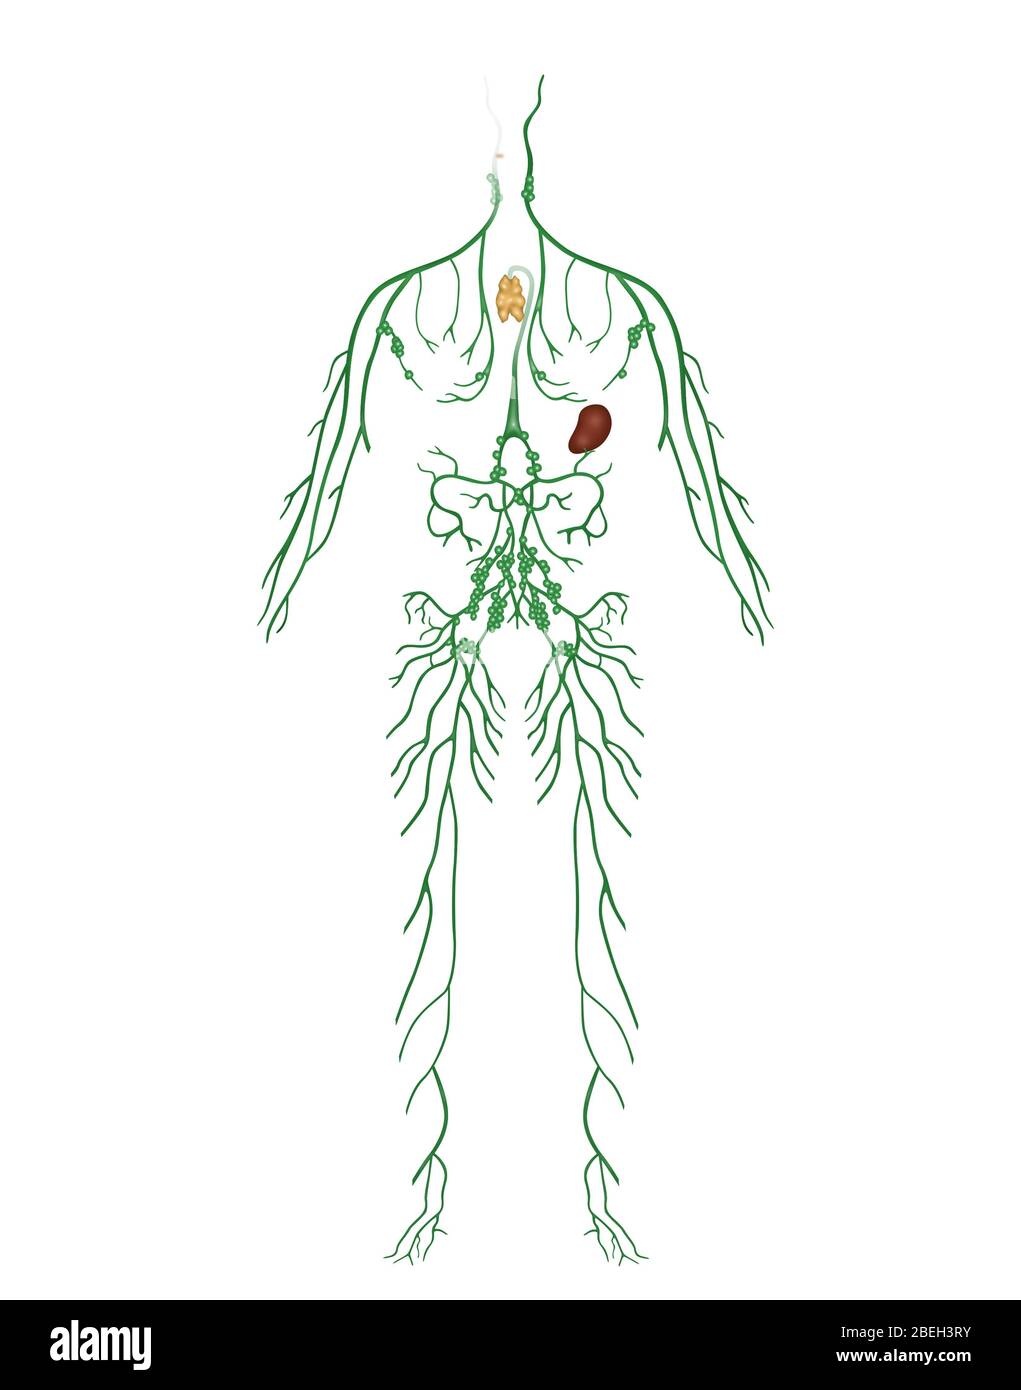 Lymphatic System, Illustration Stock Photo